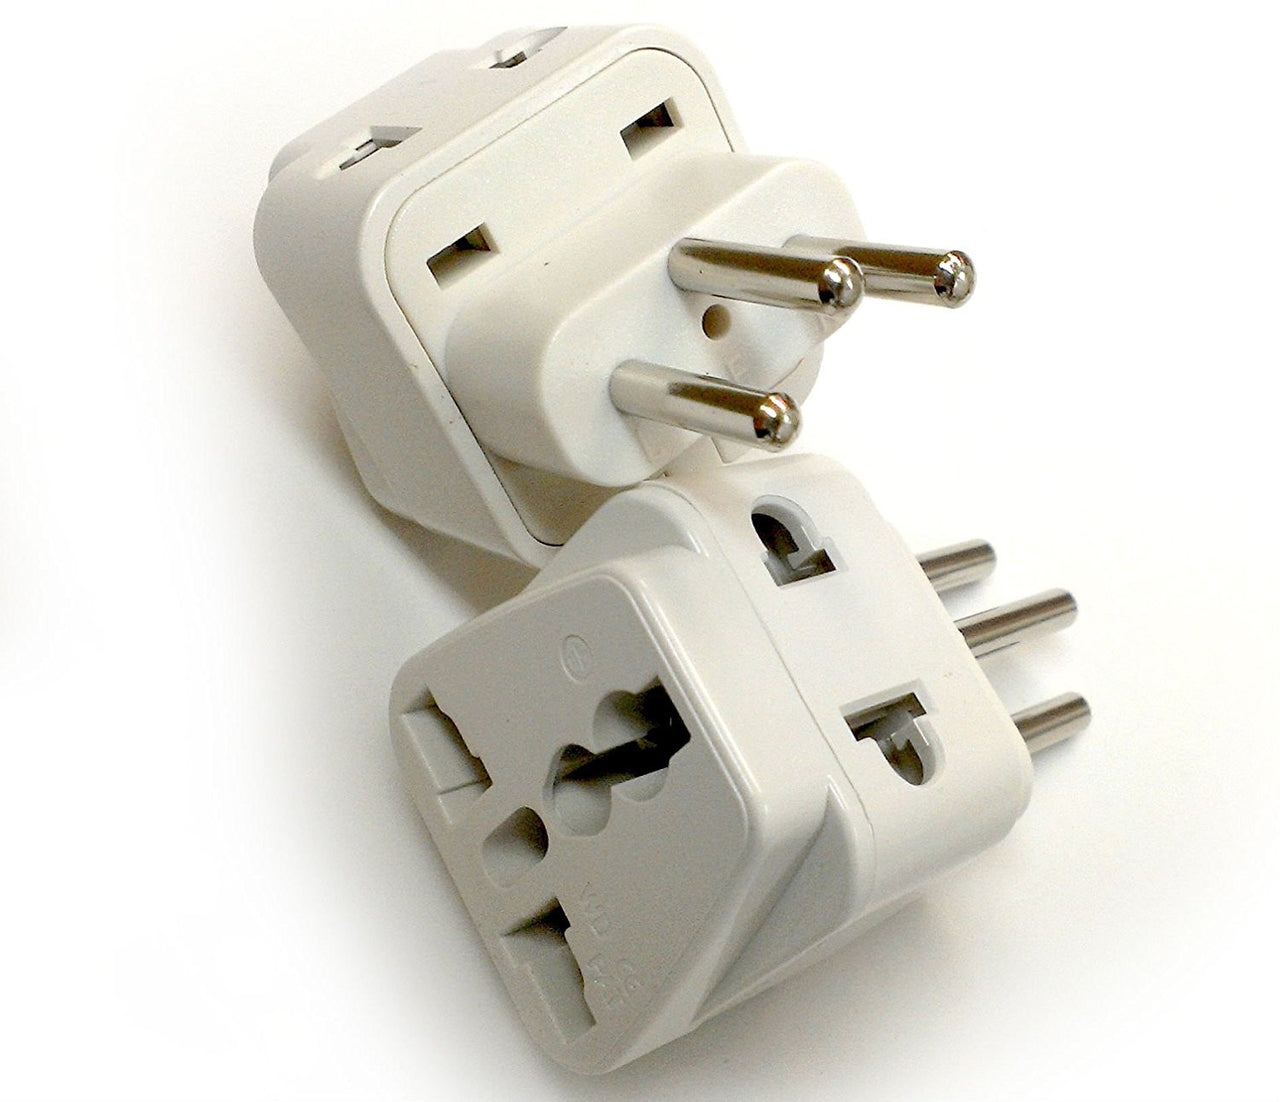 Switzerland - Type J 2 in 1 - Travel Plug Adapter - Popularelectronics.com